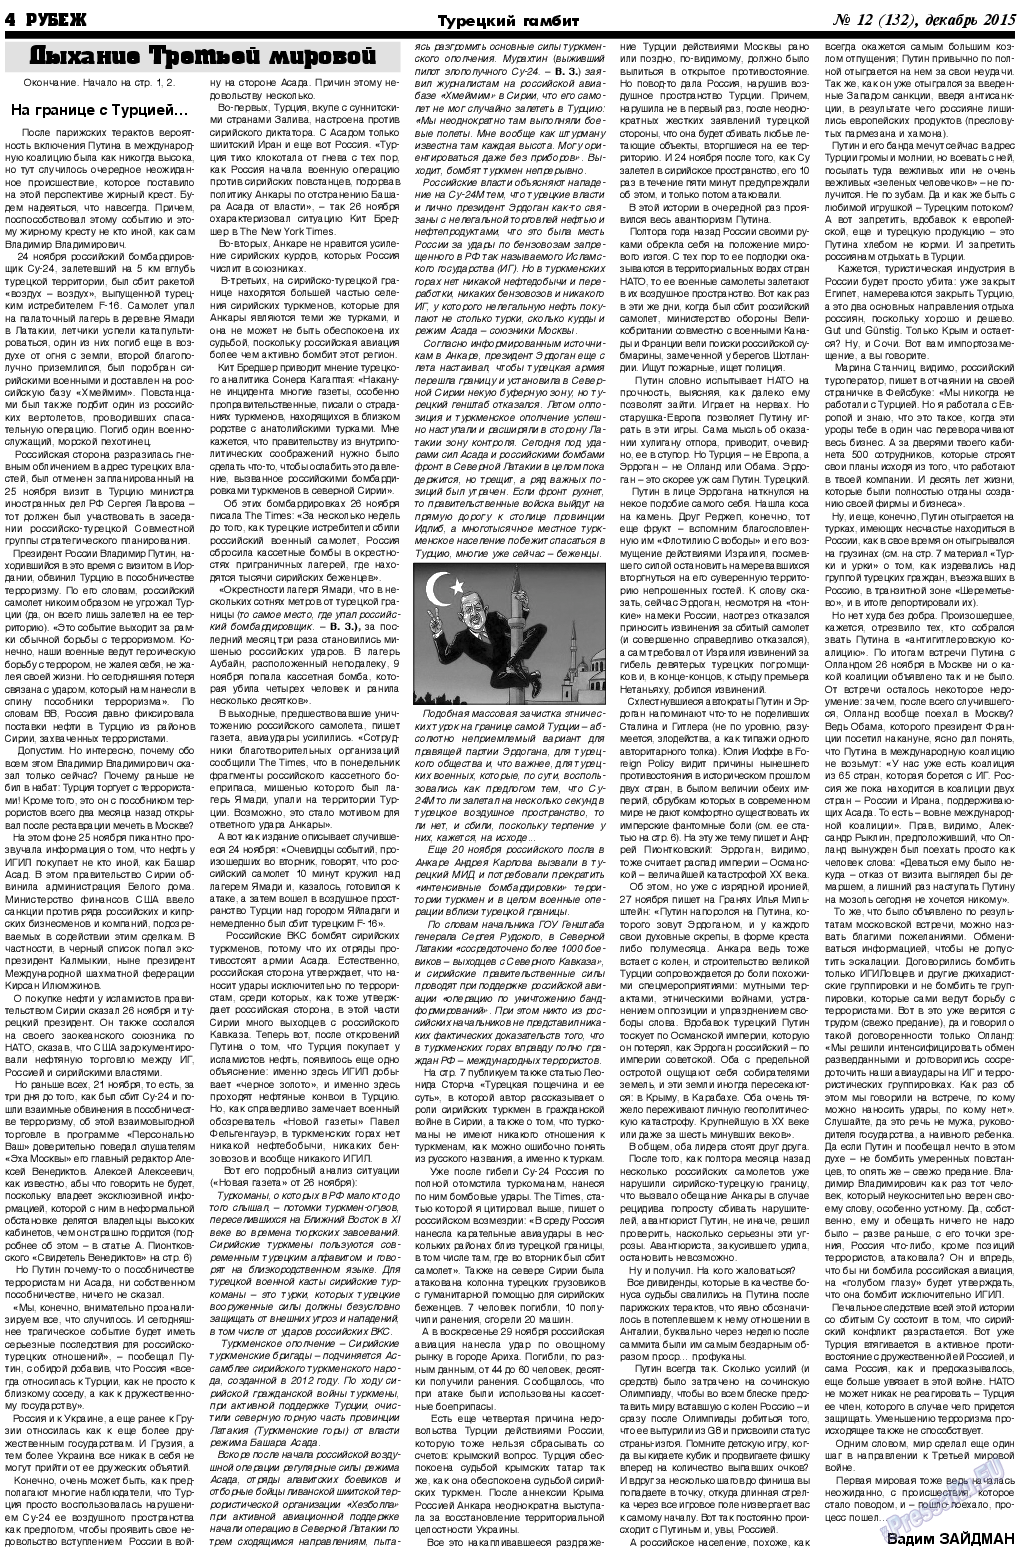 Рубеж, газета. 2015 №12 стр.4